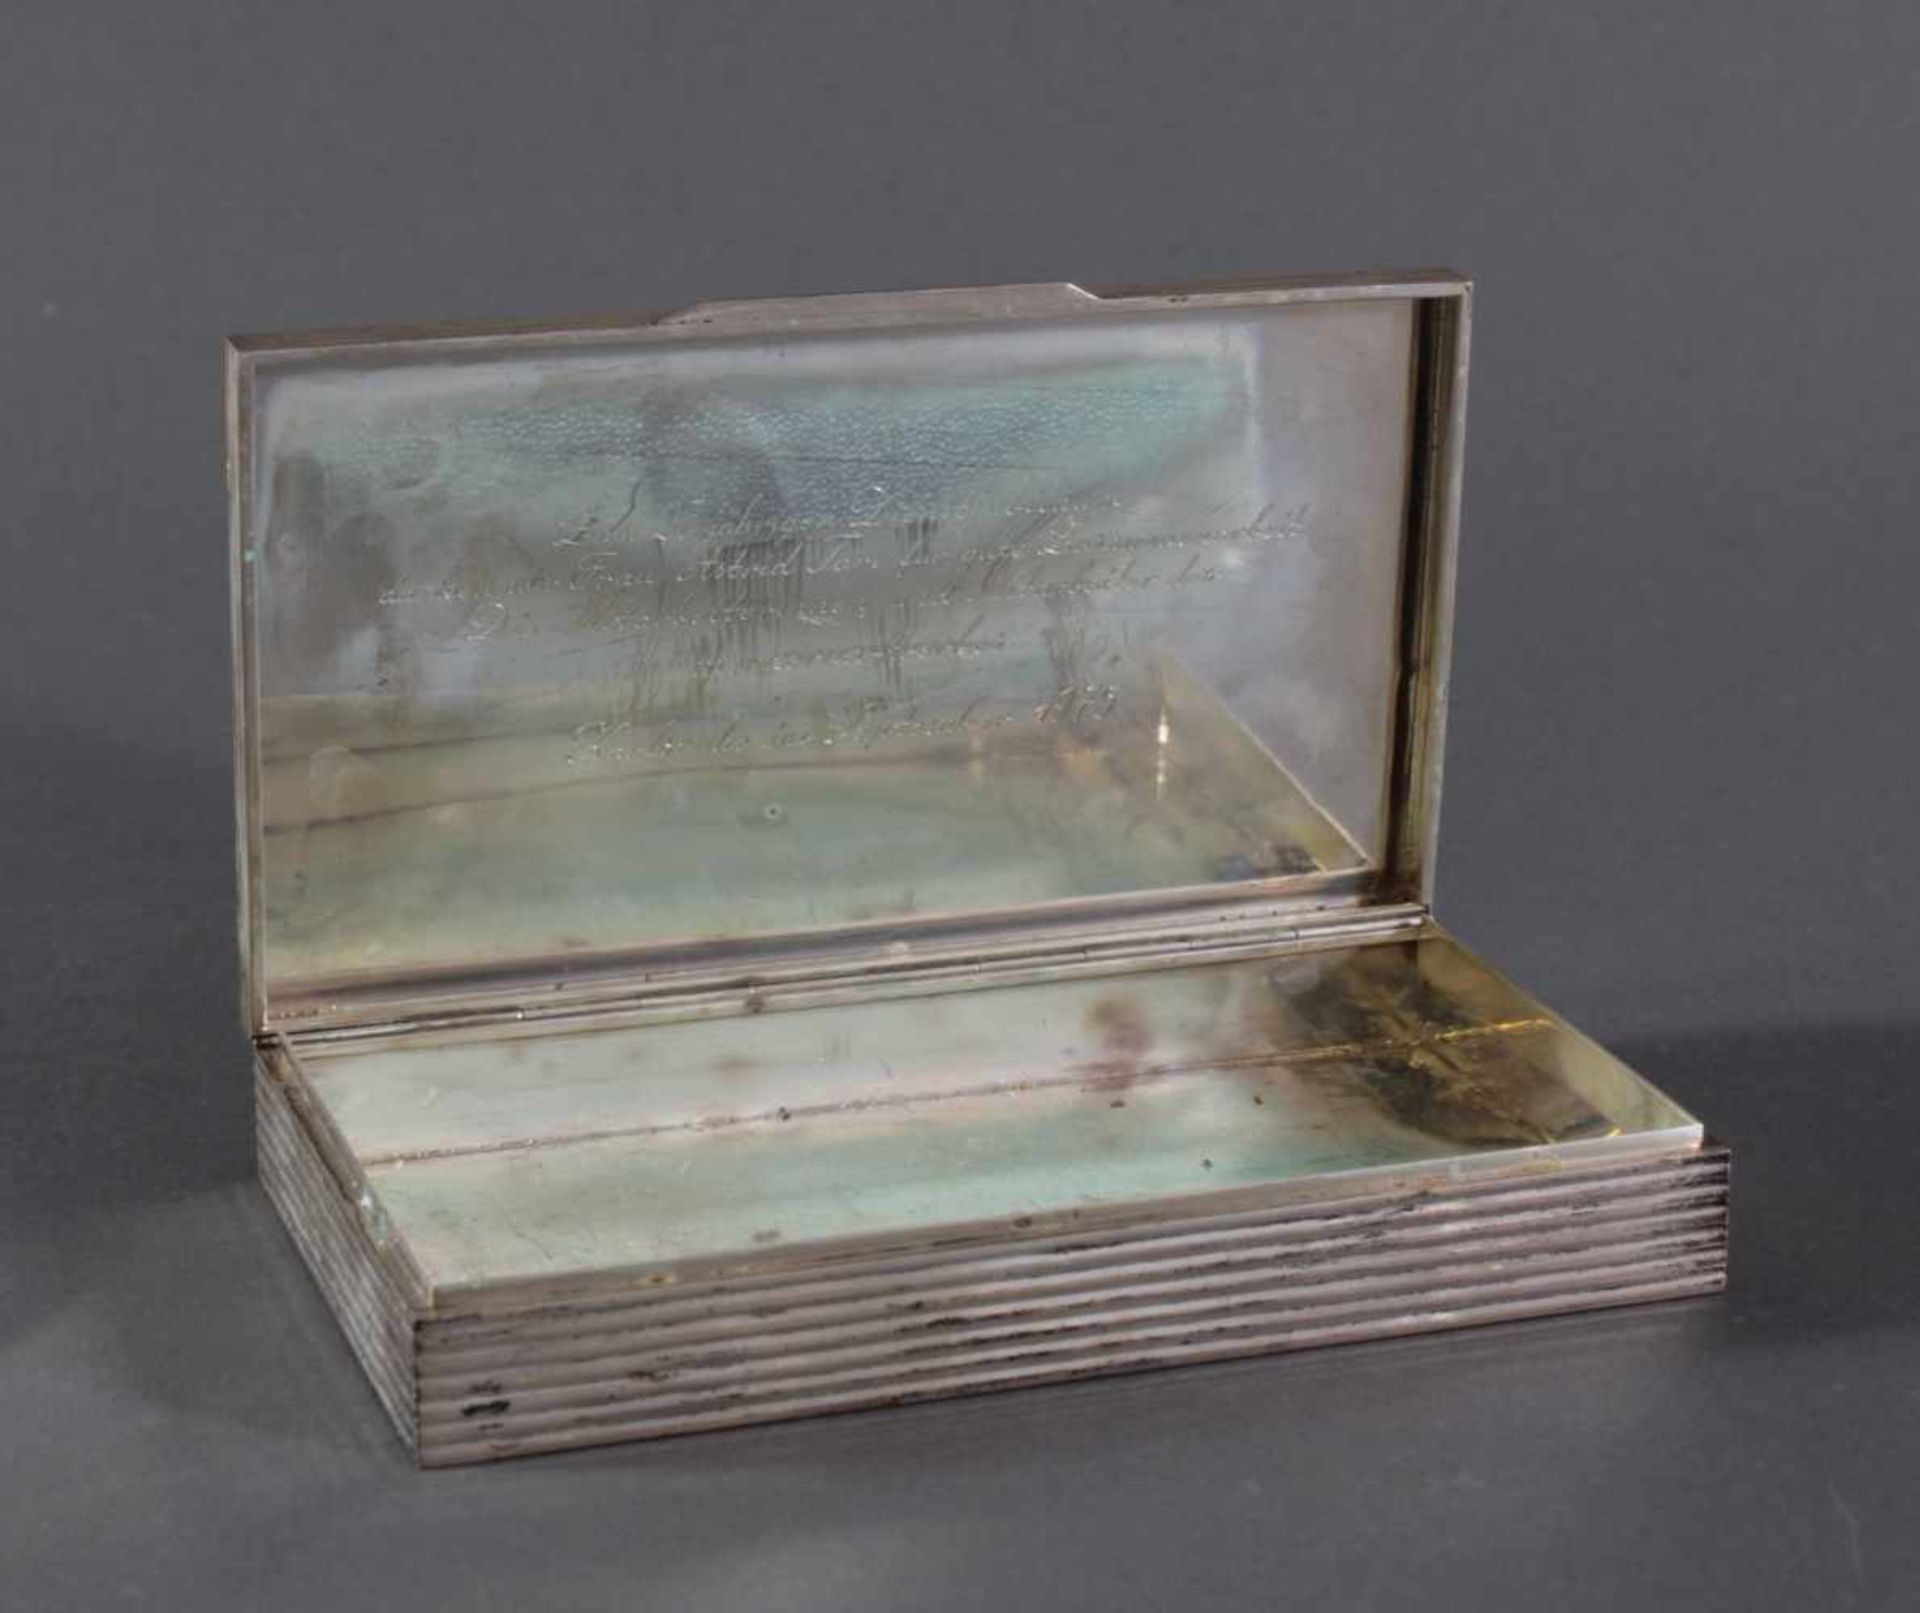 Silberne Deckelschatulle, 925er SilberGerippte Wandung, innen mit Gravur, ca. 3 x 18 x 10,5 cm, - Bild 2 aus 2